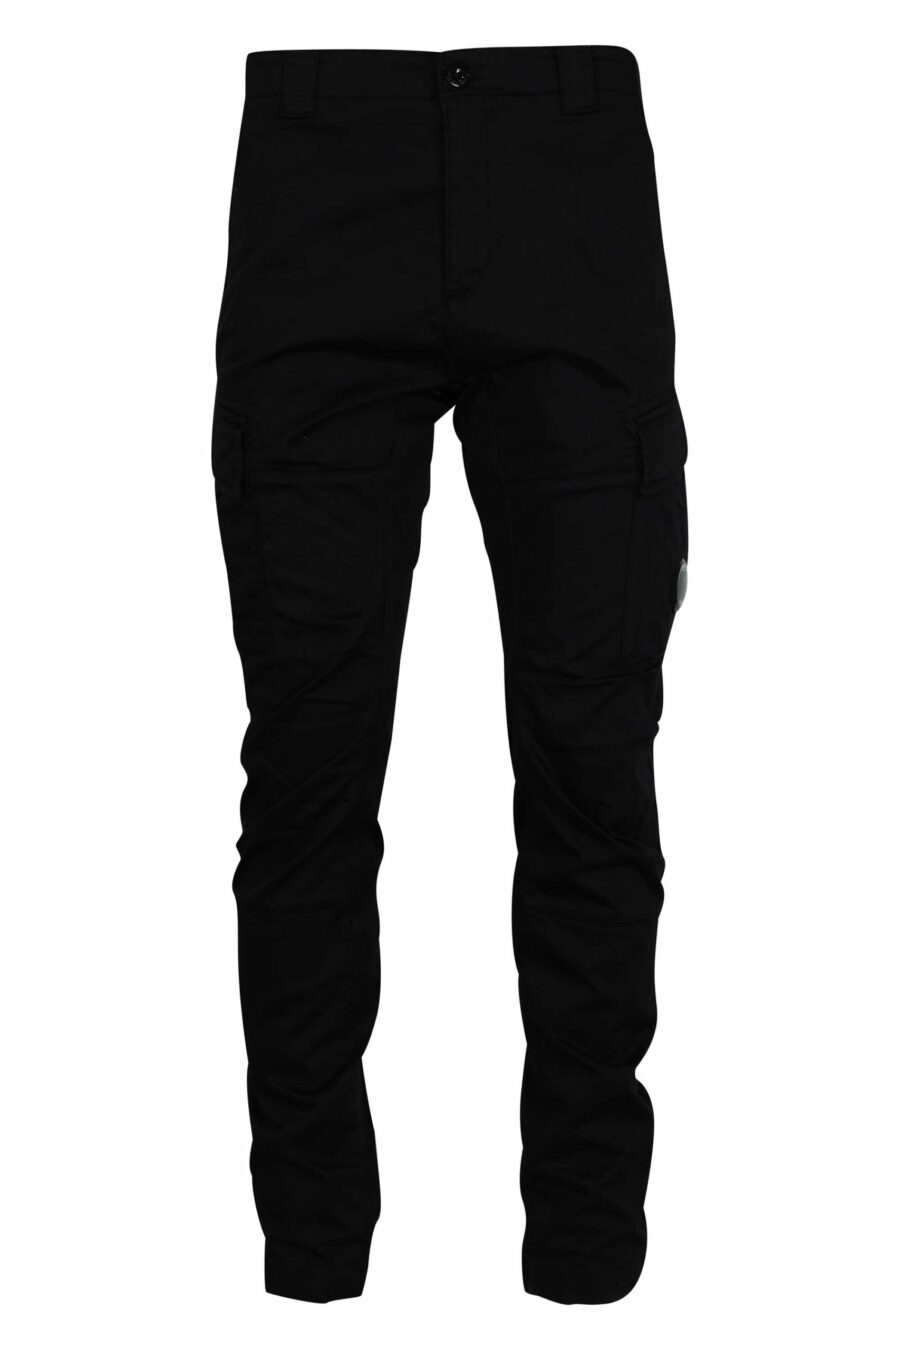 Pantalon cargo noir avec mini-logo - 7620943717808